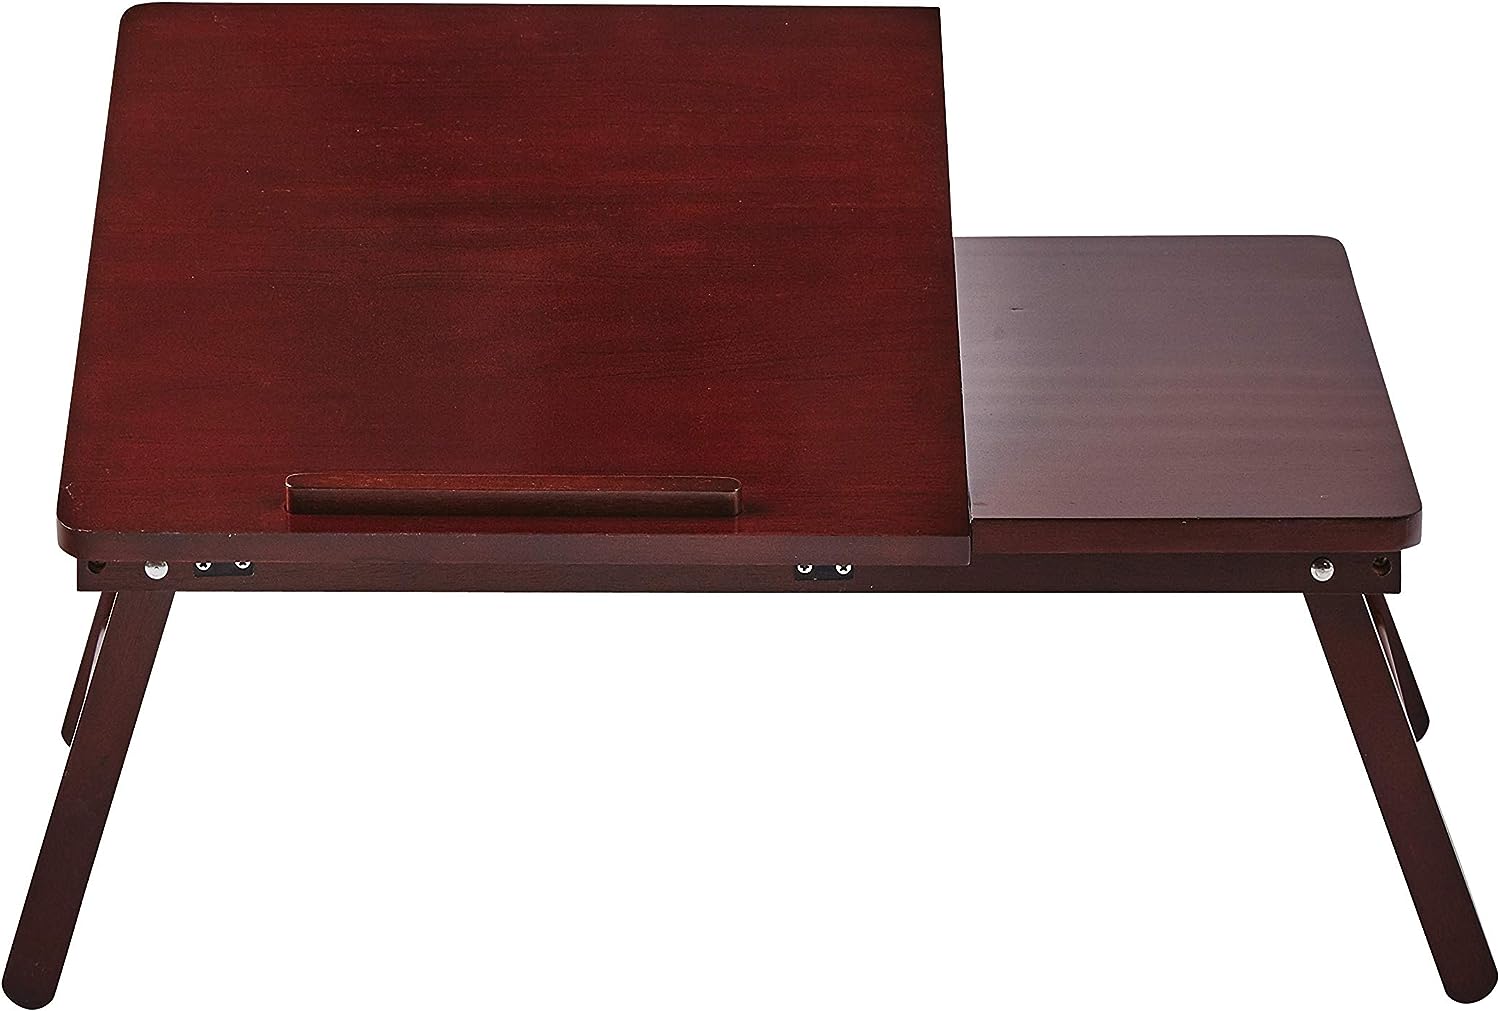 Amazon Basics Portable Lap Desk with Adjustable Lift [...]